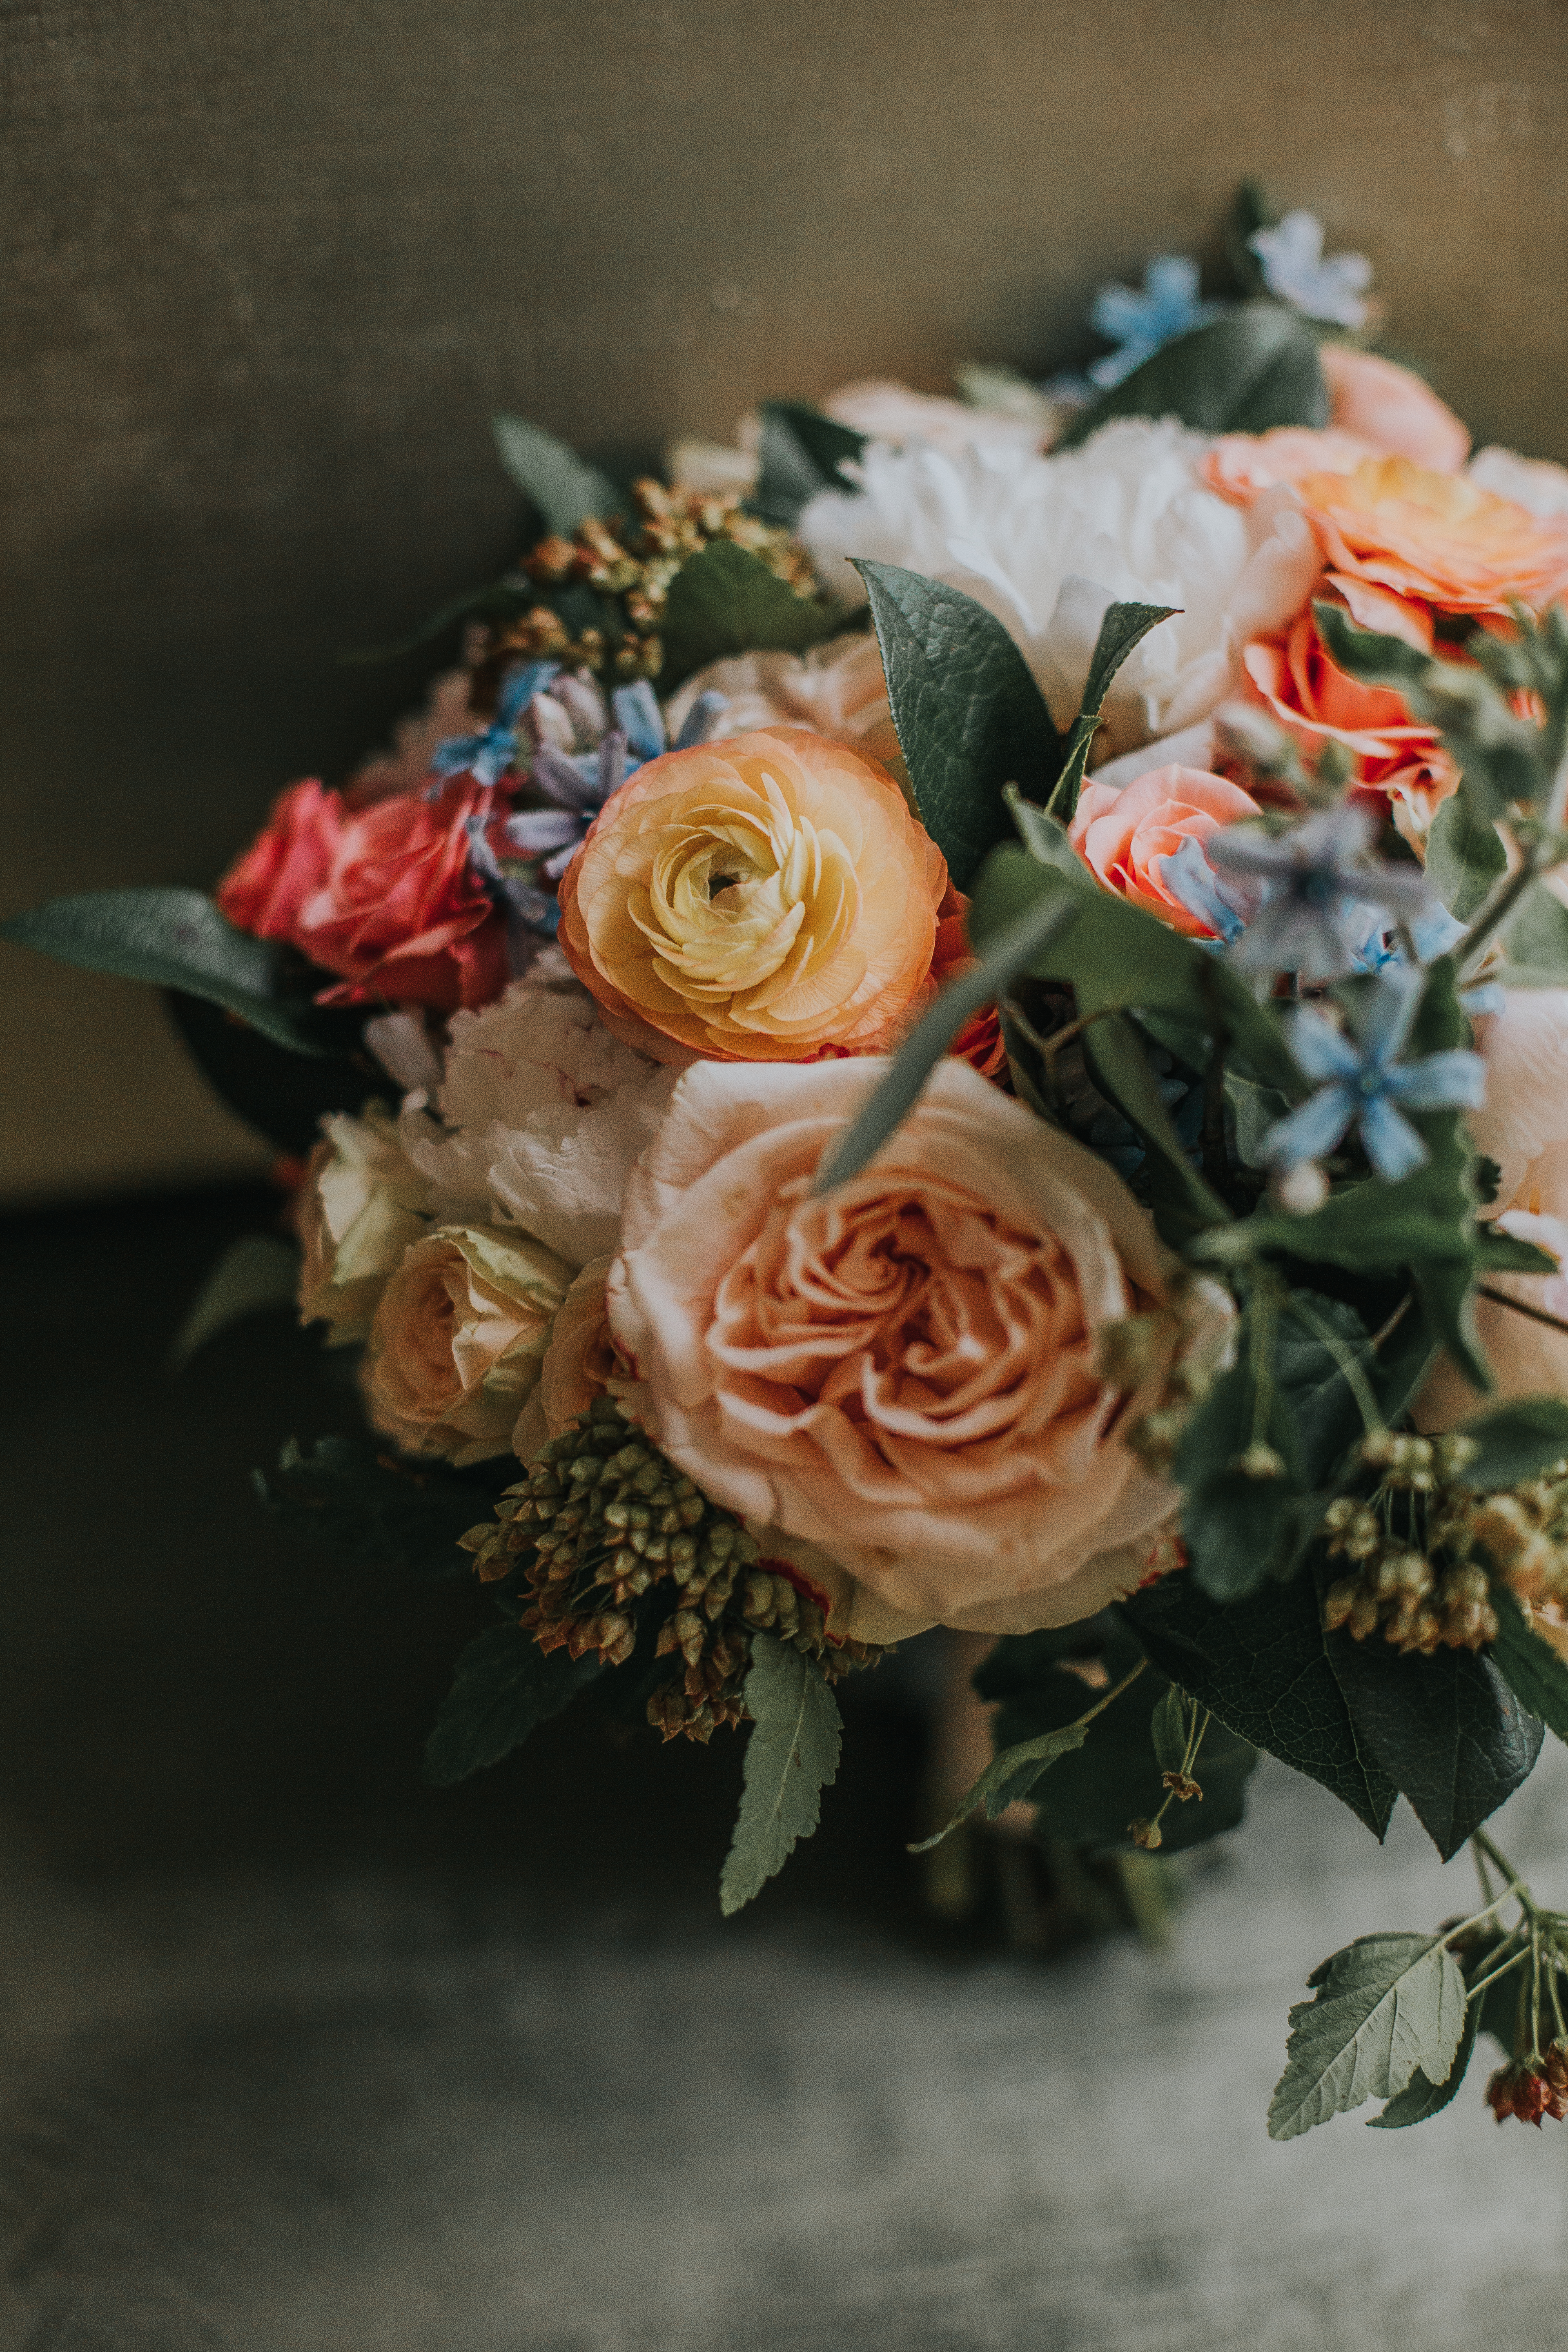 Bridal bouquet vintage style with orange ranunculus, peach garden roses, and tweedia.